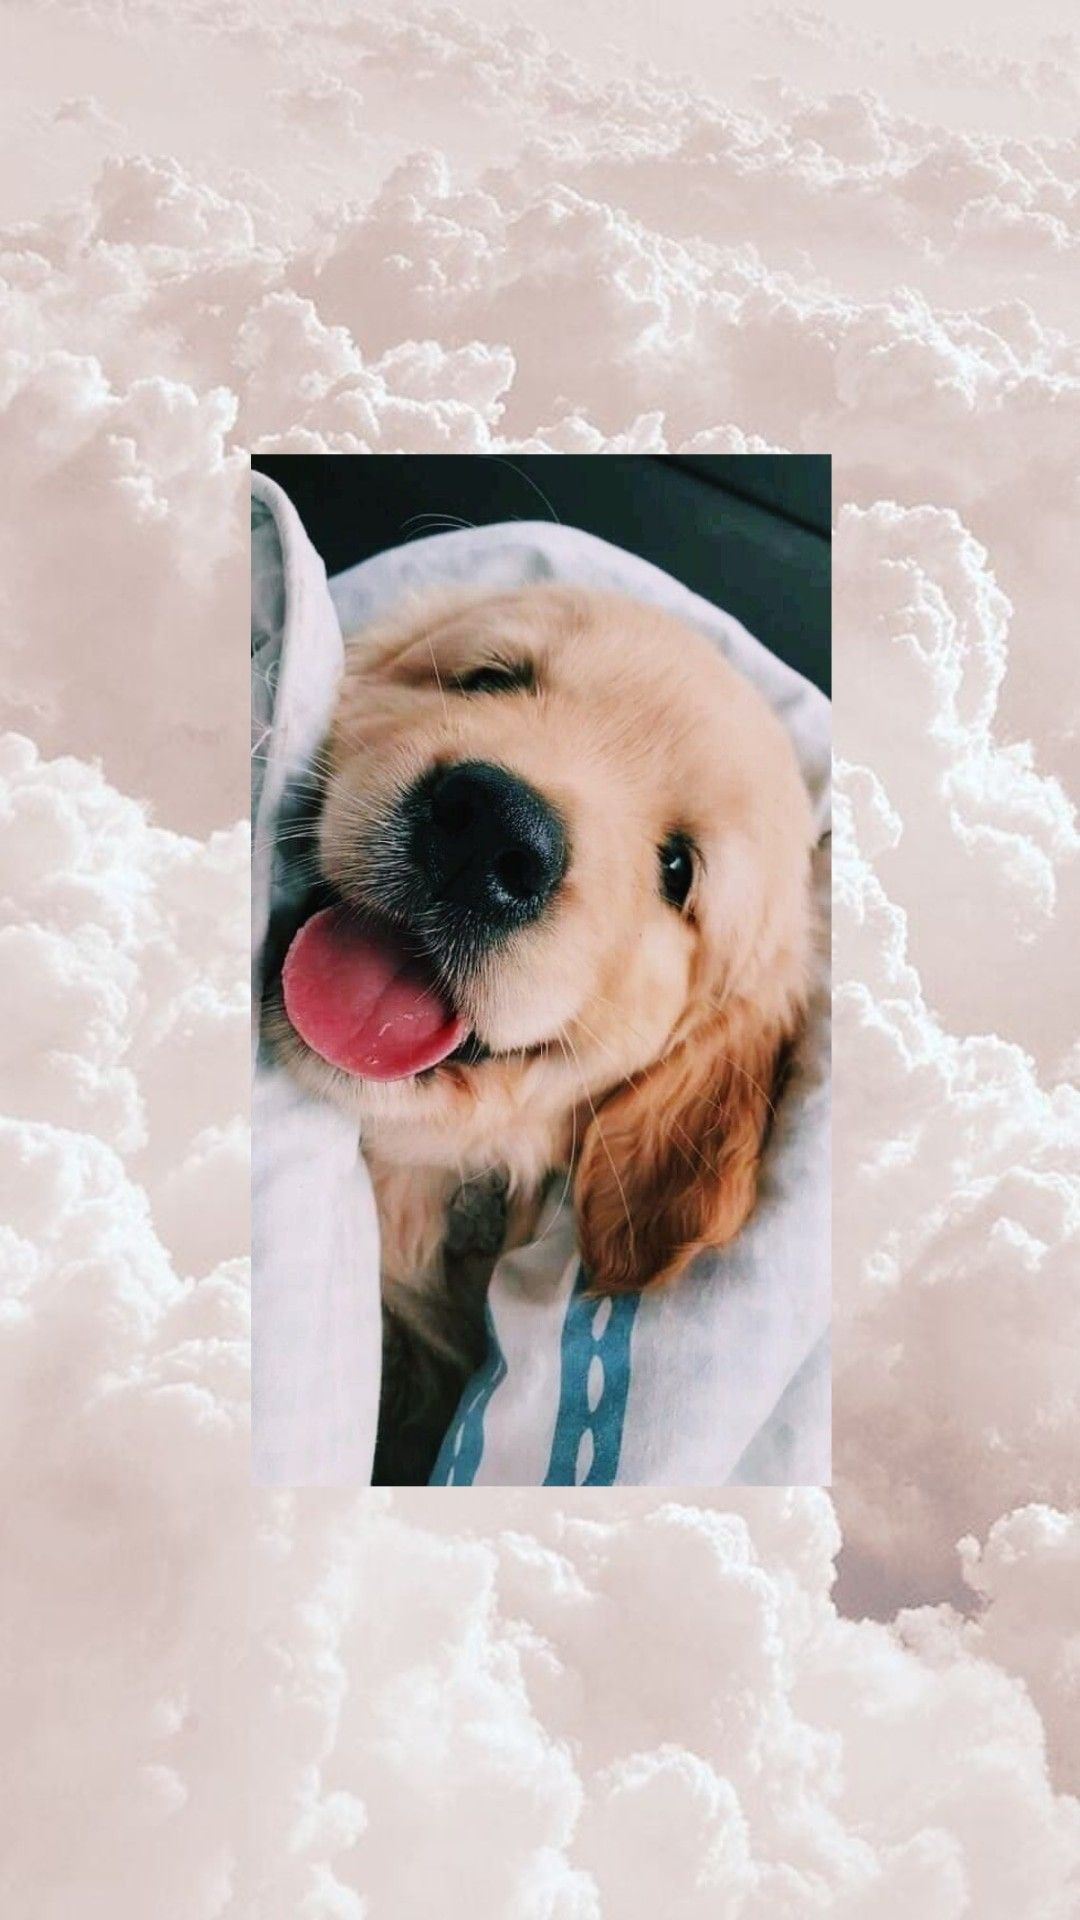  Süße Tier Hintergrundbild 1080x1920. Weinhold Leamarie on Hintergrund iphone. Cute dog wallpaper, Cute animal photo, Cute dogs and puppies